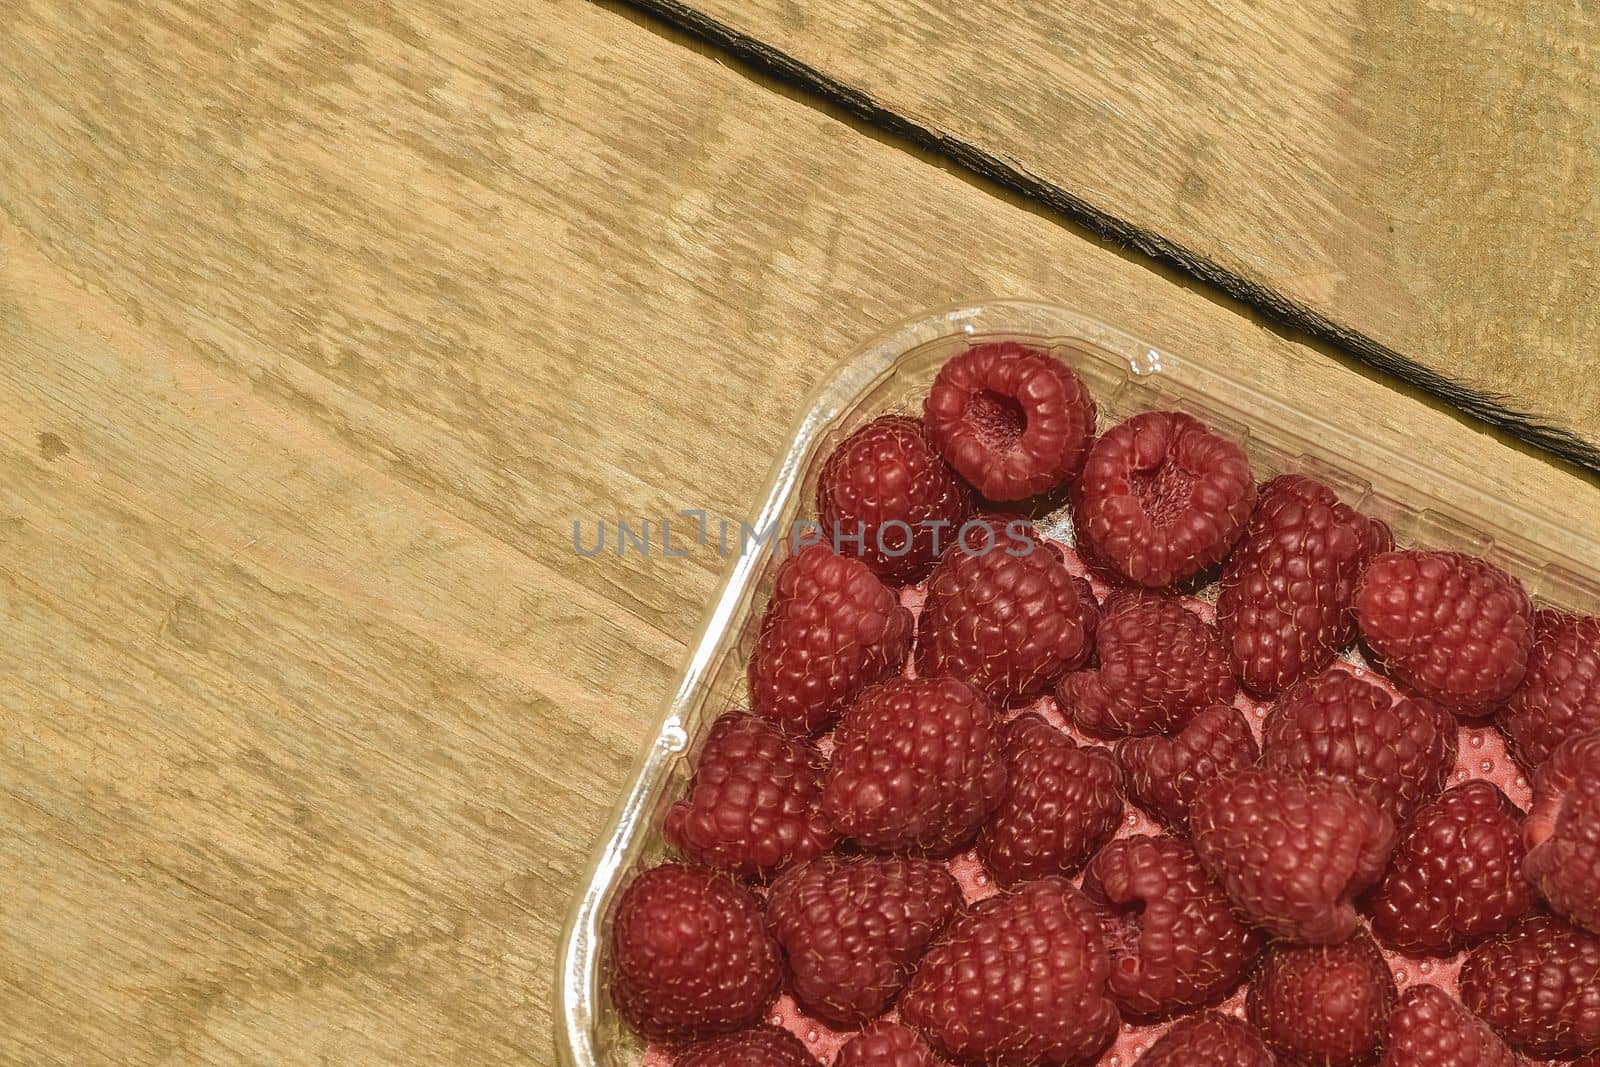 Red-fruited raspberries in plastic box on wooden background. Raspberries background. Close-up.